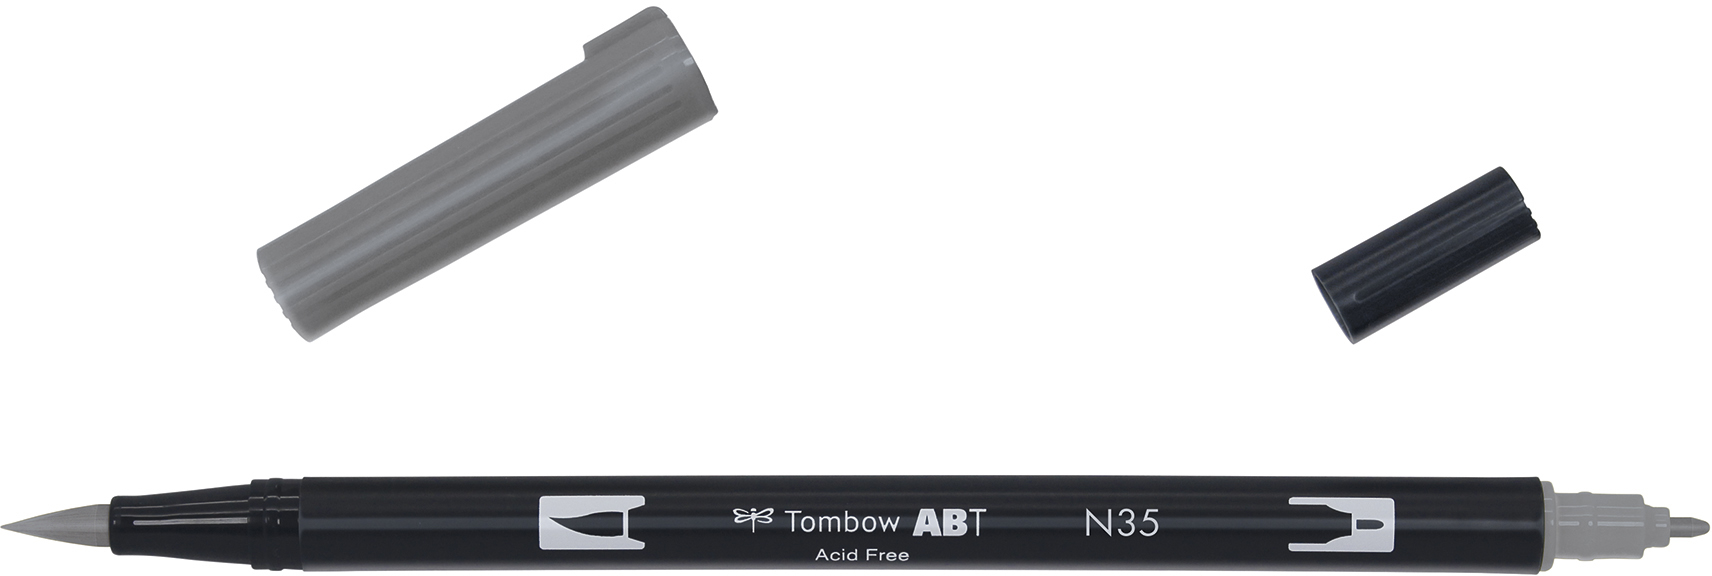 TOMBOW Dual Brush Pen ABT N35 cool gray 12 cool gray 12